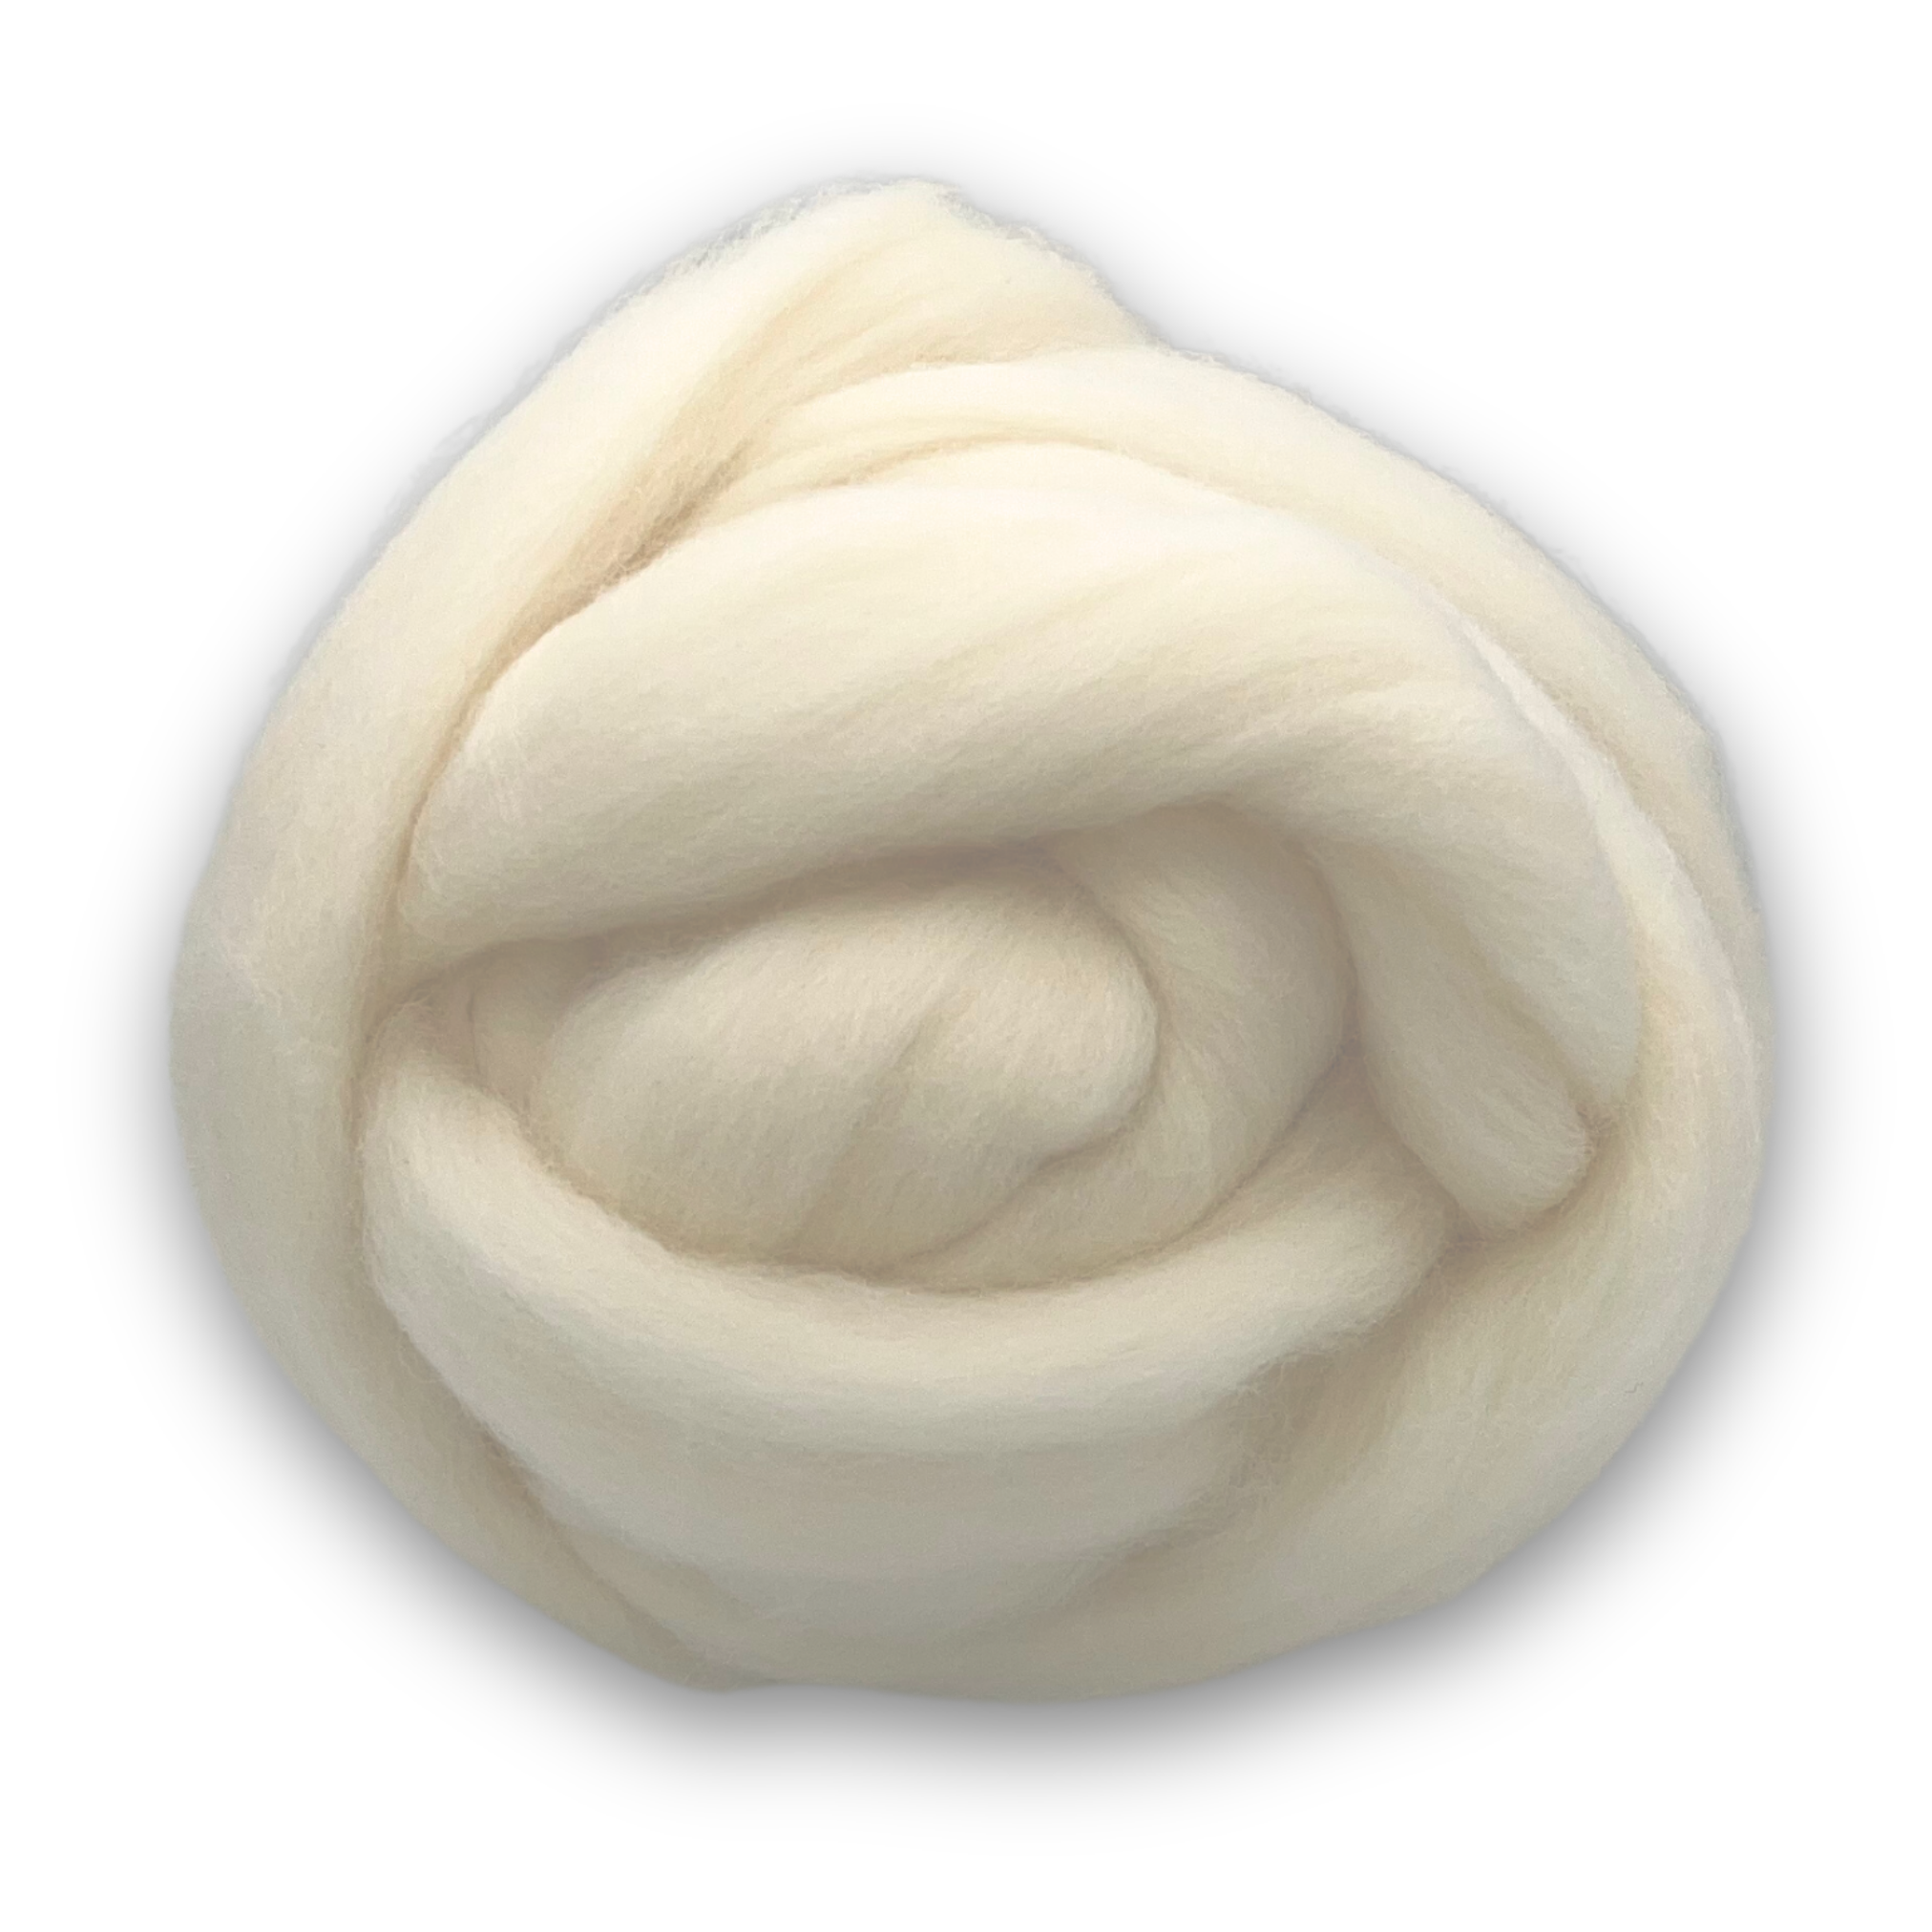 7 Lbs Pounds Wool Chunky Yarn, Bulk Chunky Yarn, Wool Roving Fiber Jumbo  Yarn, Spinning, Make Your Own Chunky Knit, Bulk Roving Yarn SALE 